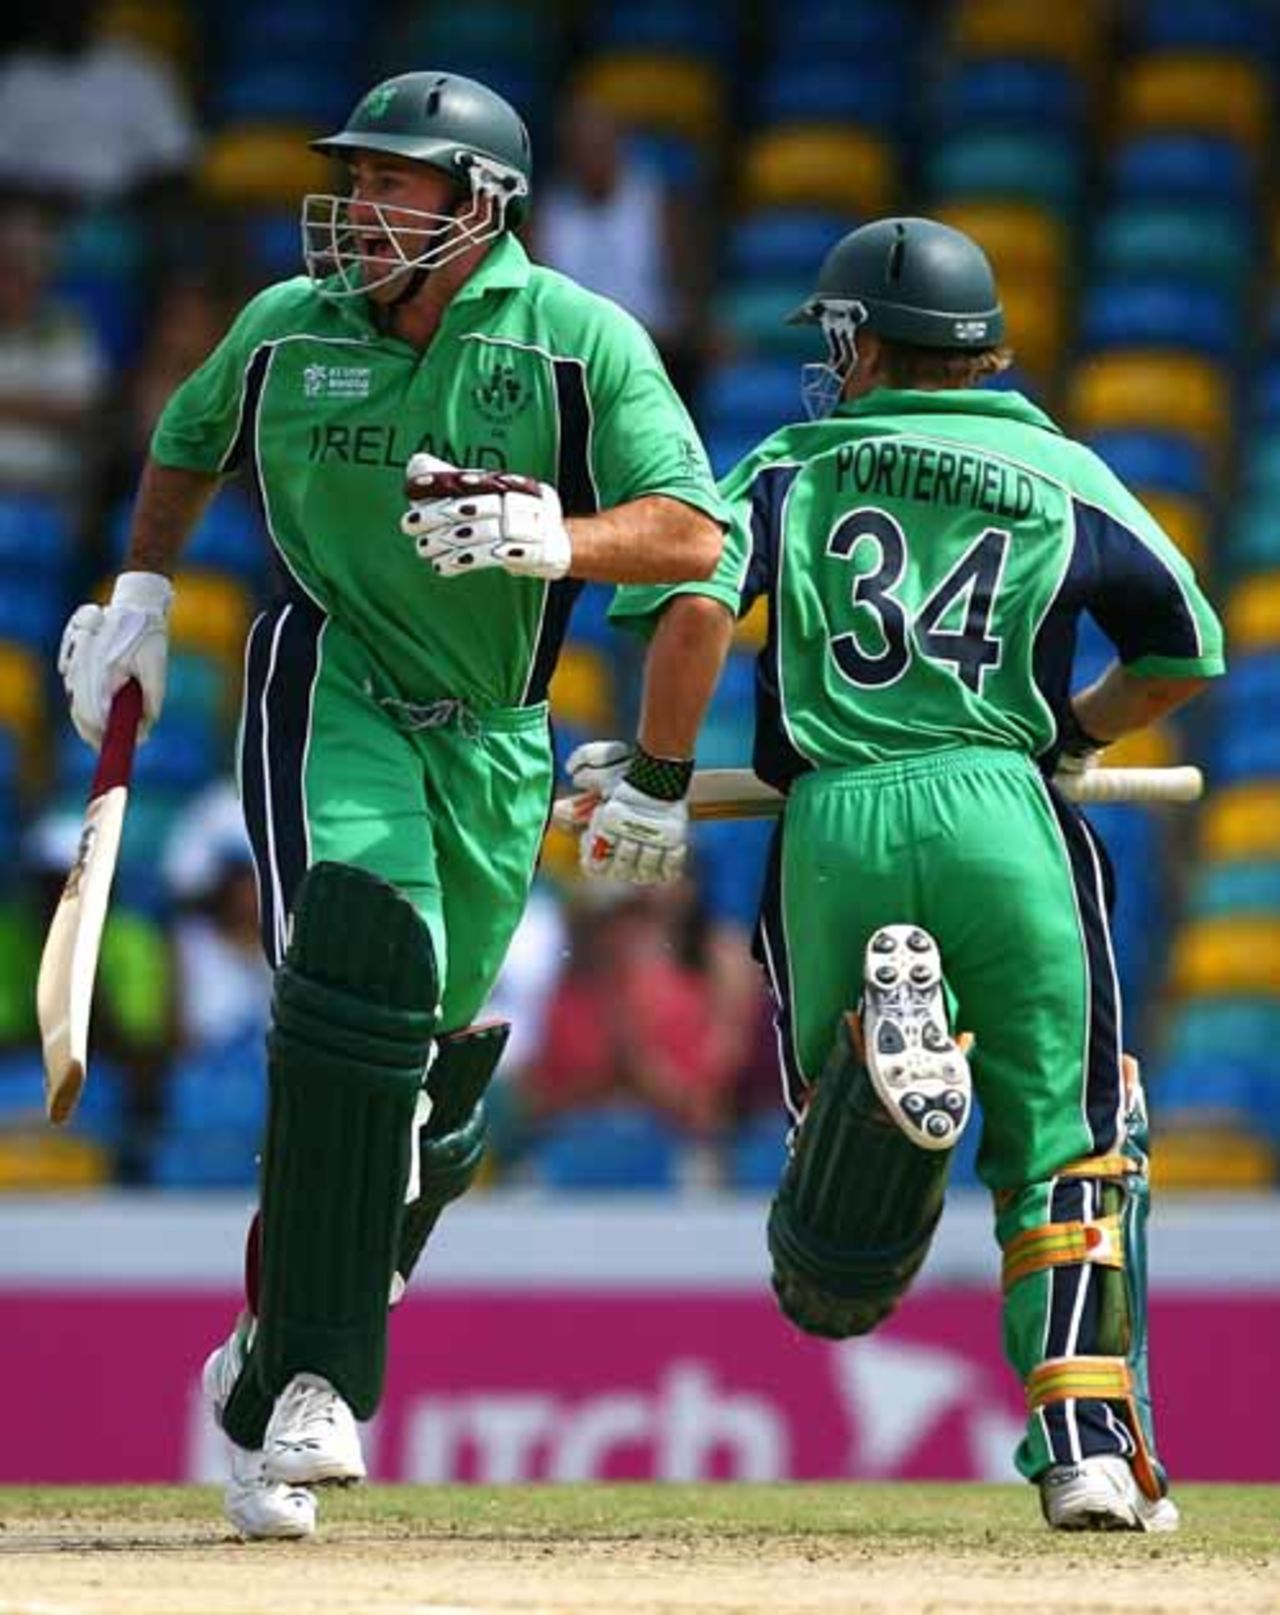 Jeremy Bray and William Porterfield take a cheeky single, Bangladesh v Ireland, Super Eights, Barbados, April 15, 2007